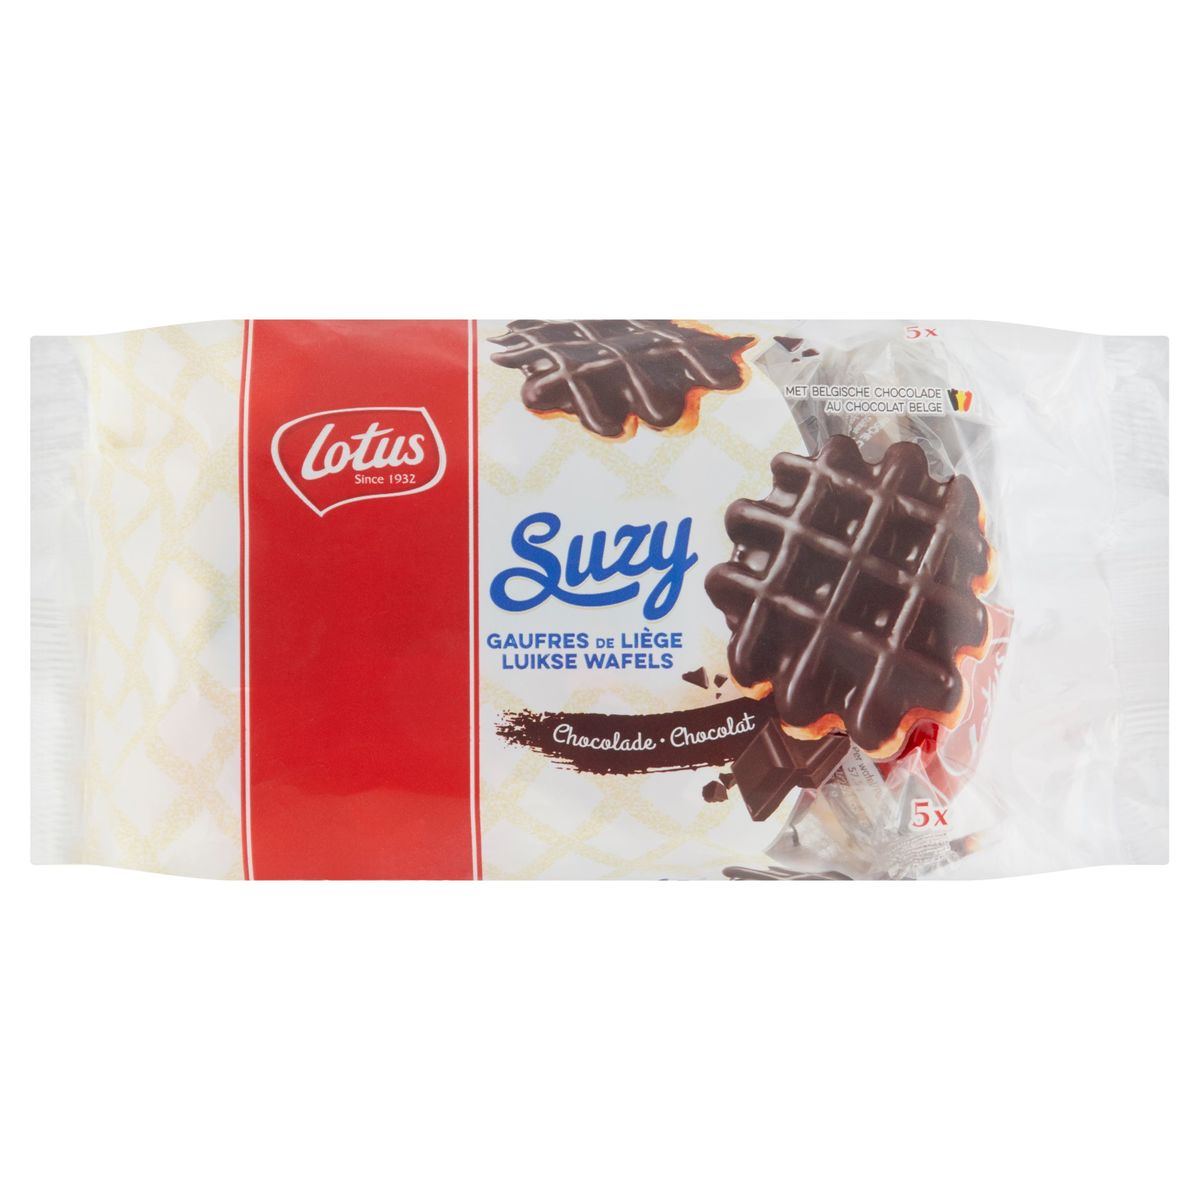 Lotus Suzy Luikse Wafels Chocolade 5 x 57.5 g